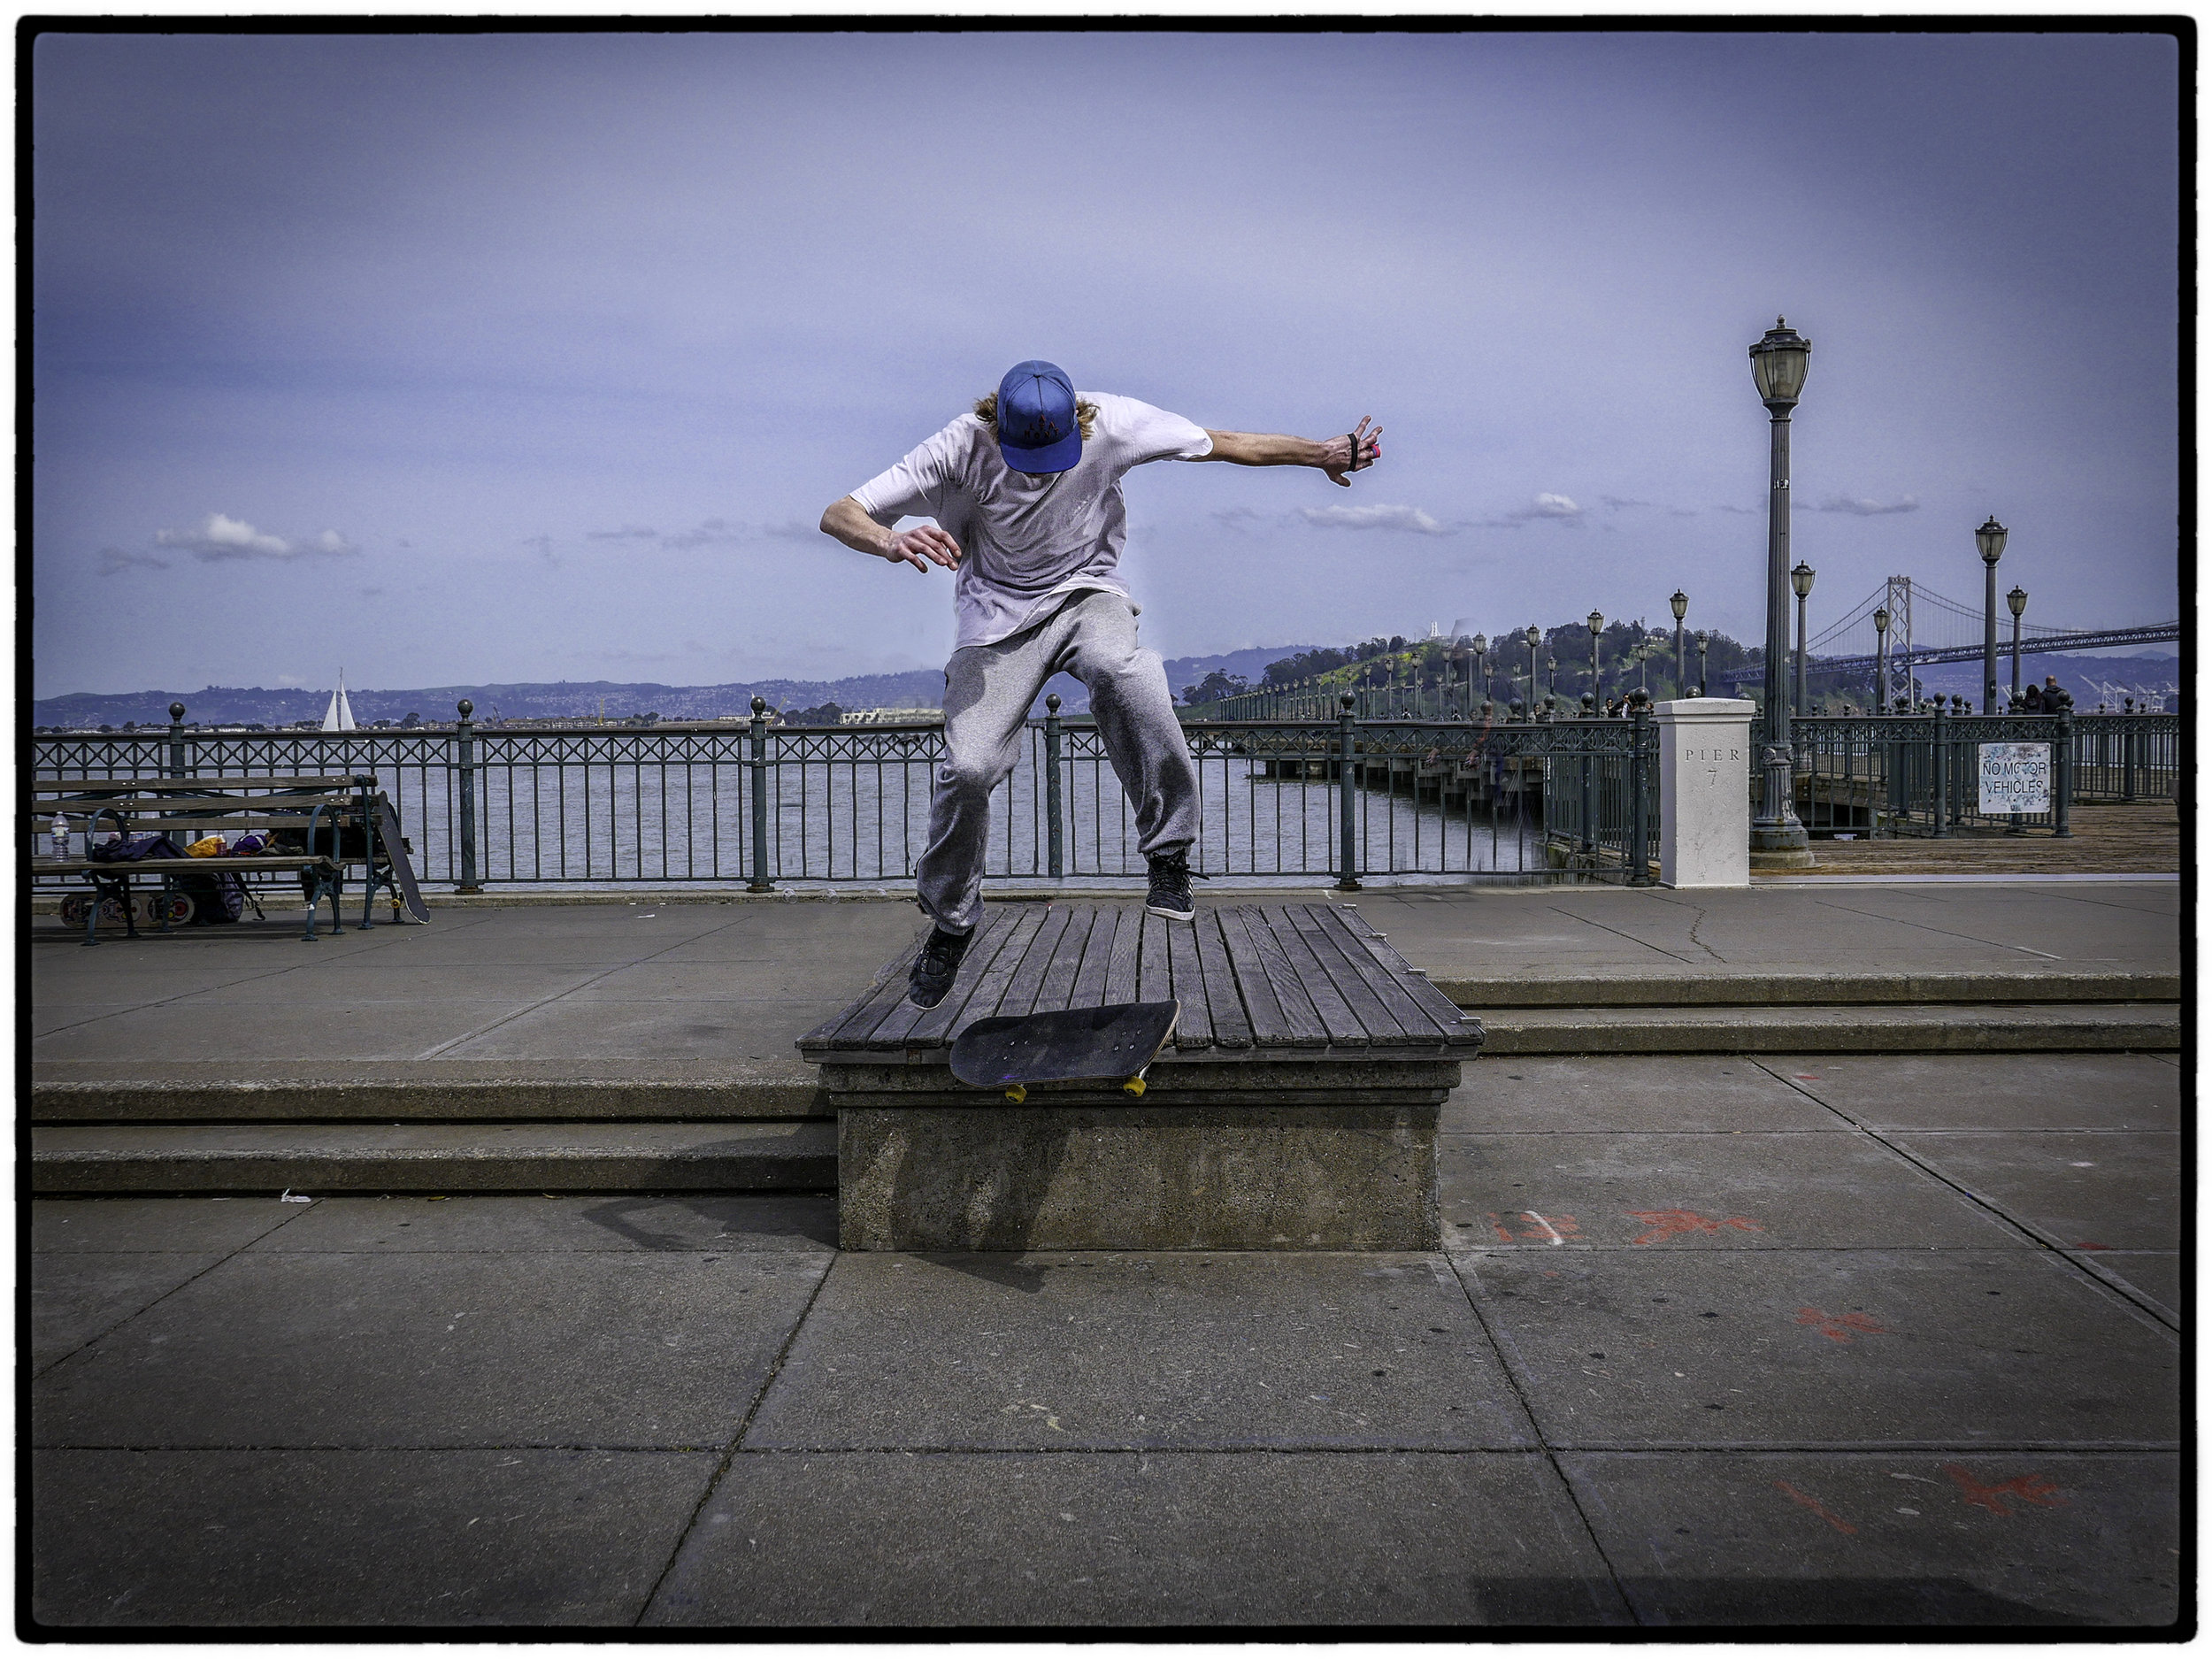 Skateboarder, Embarcadero, SF 4/19